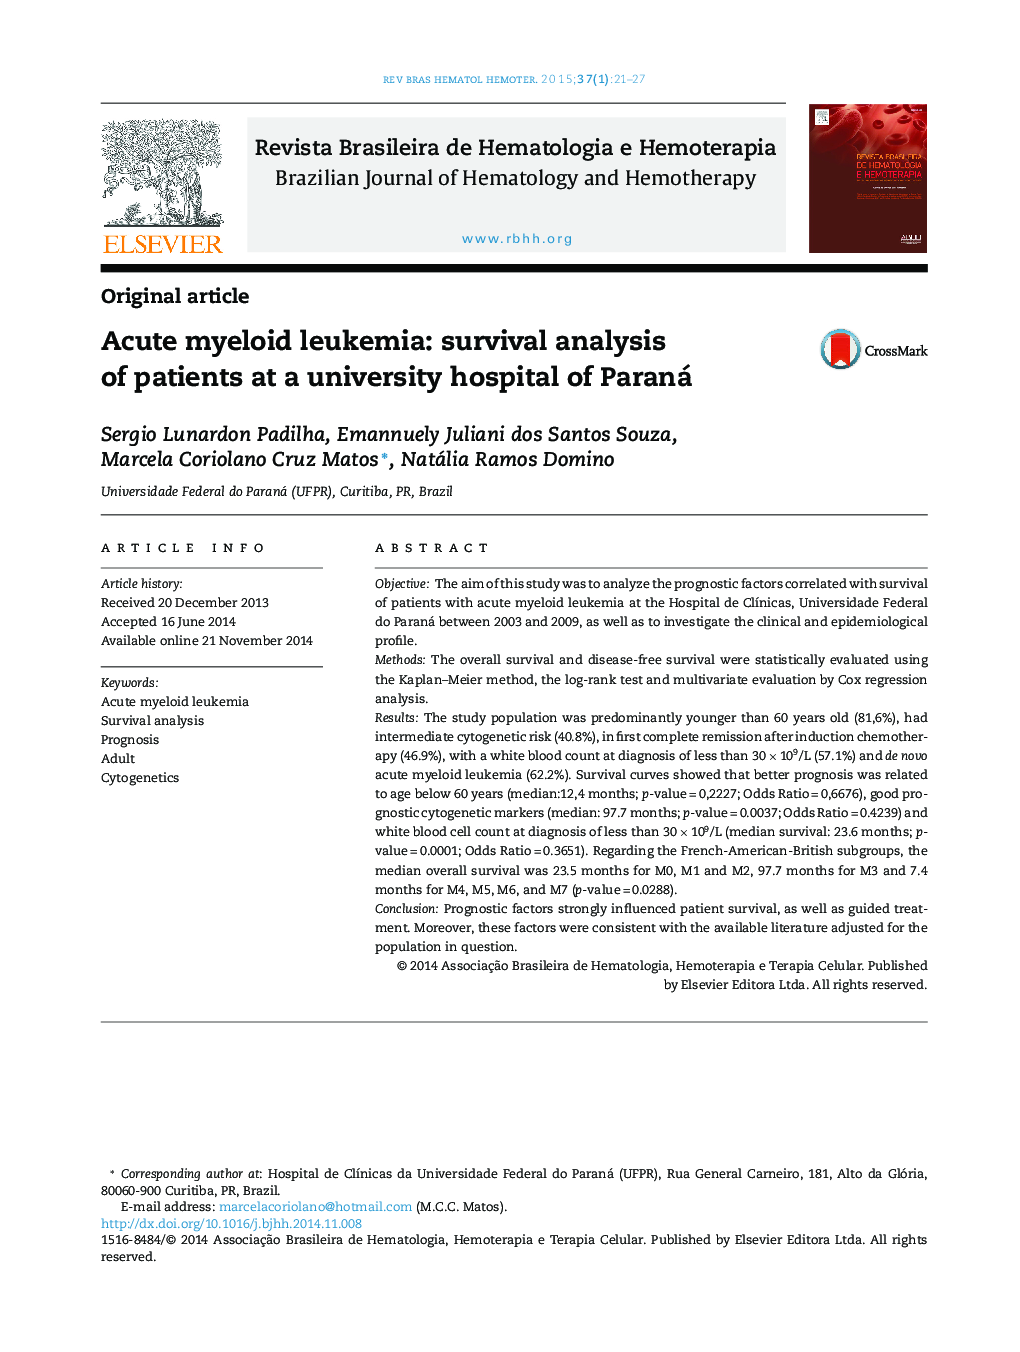 Acute myeloid leukemia: survival analysis of patients at a university hospital of Paraná